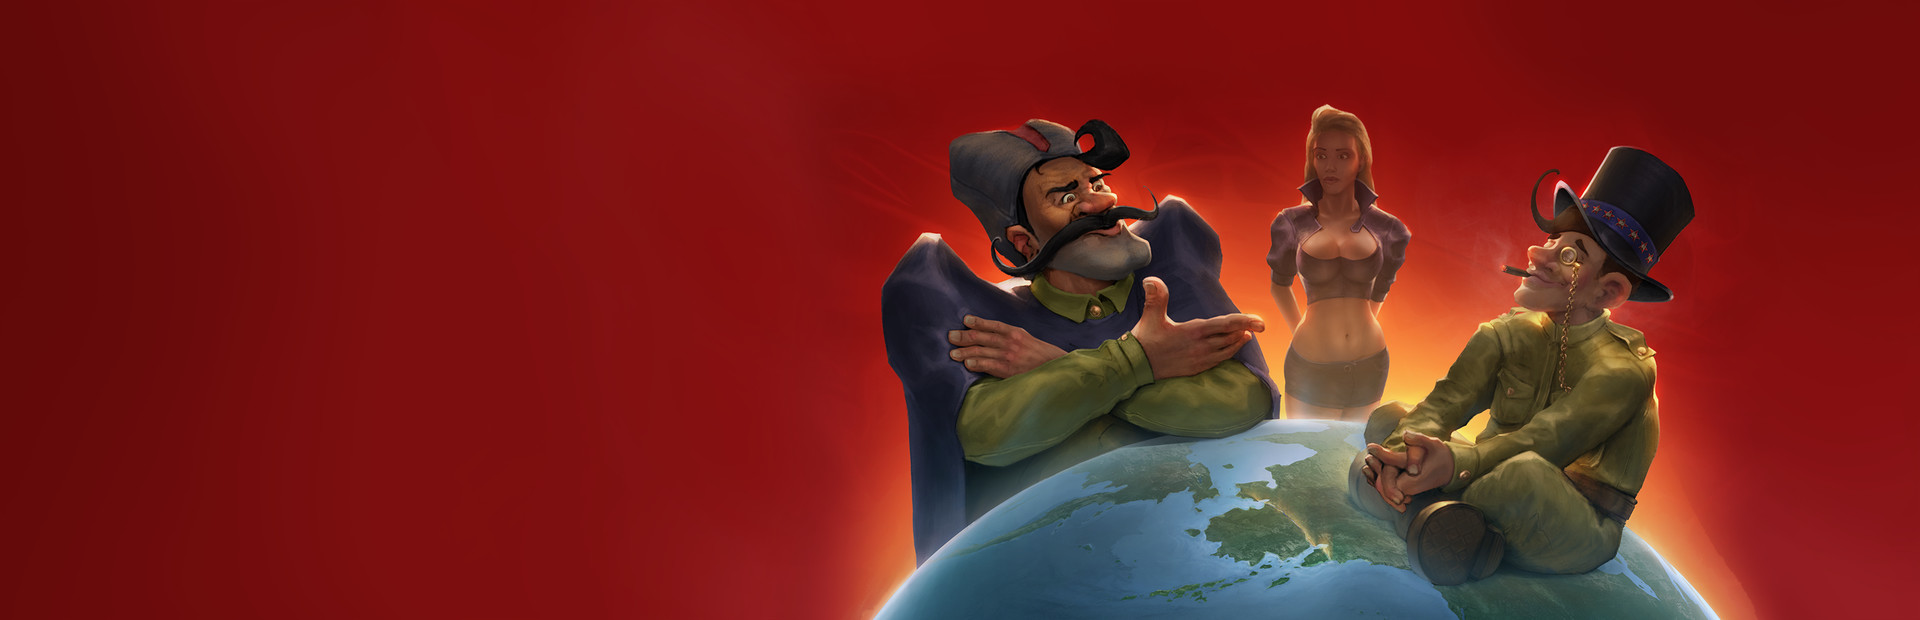 Red Comrades 3: Return of Alaska. Reloaded cover image